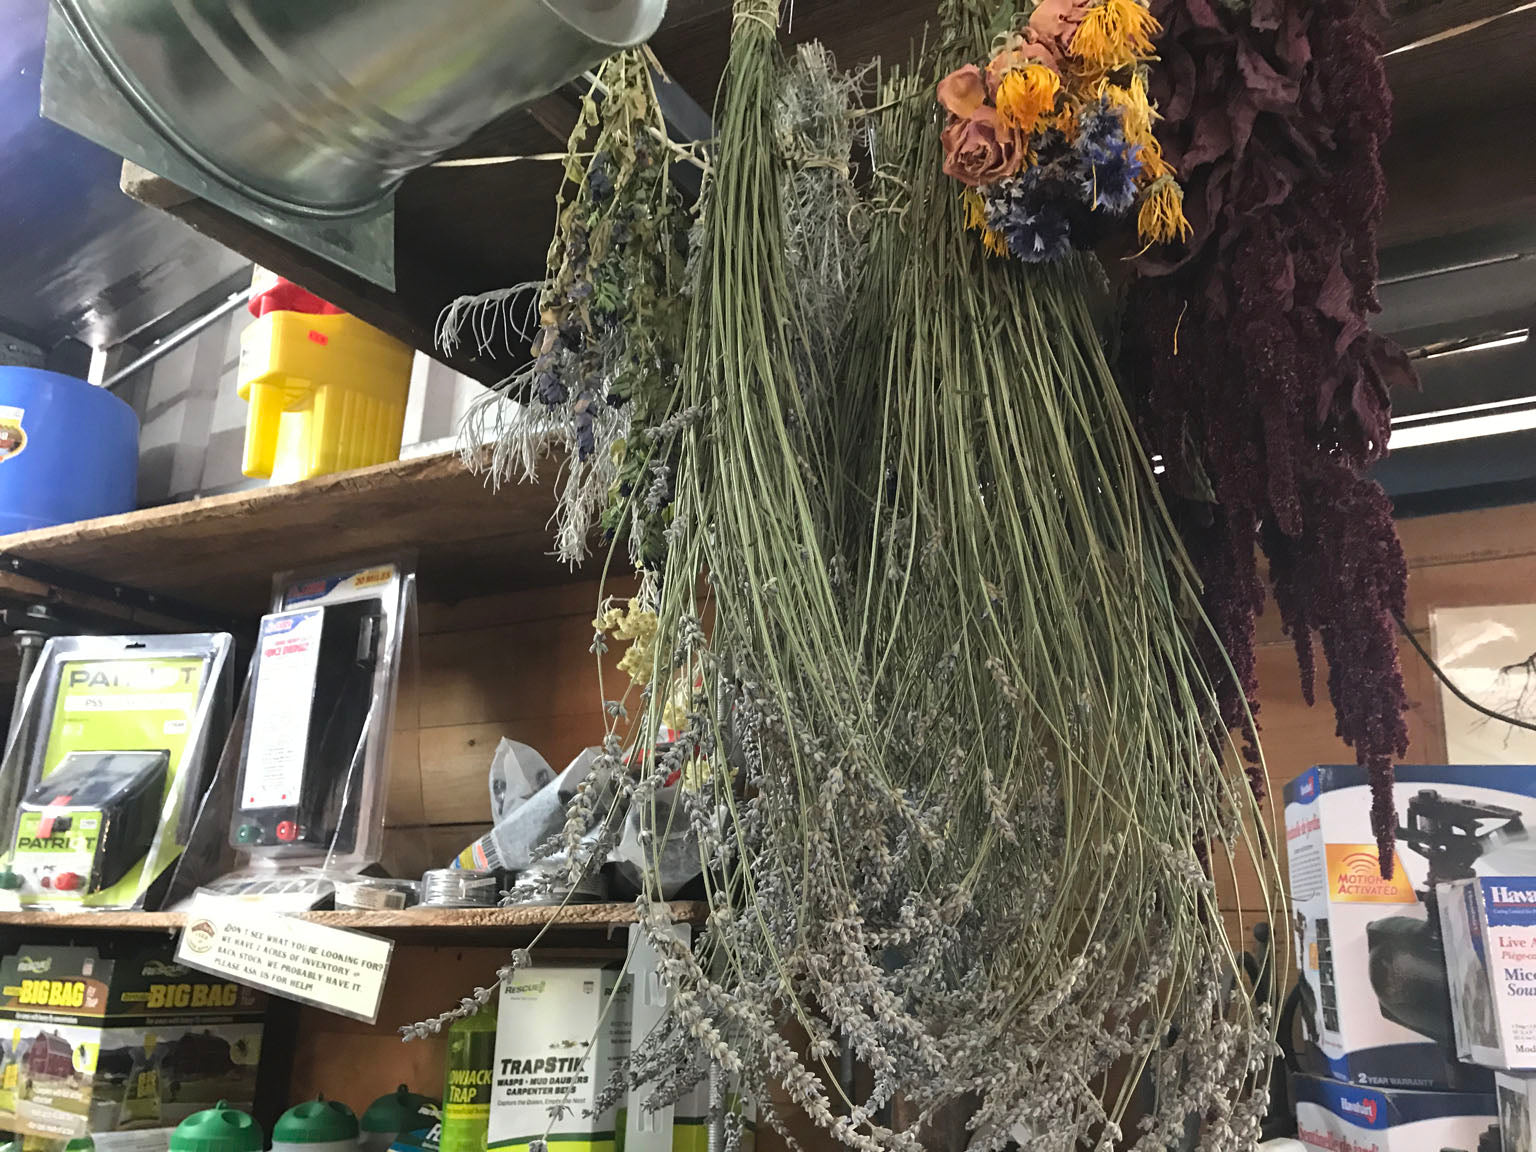 hanging herbs